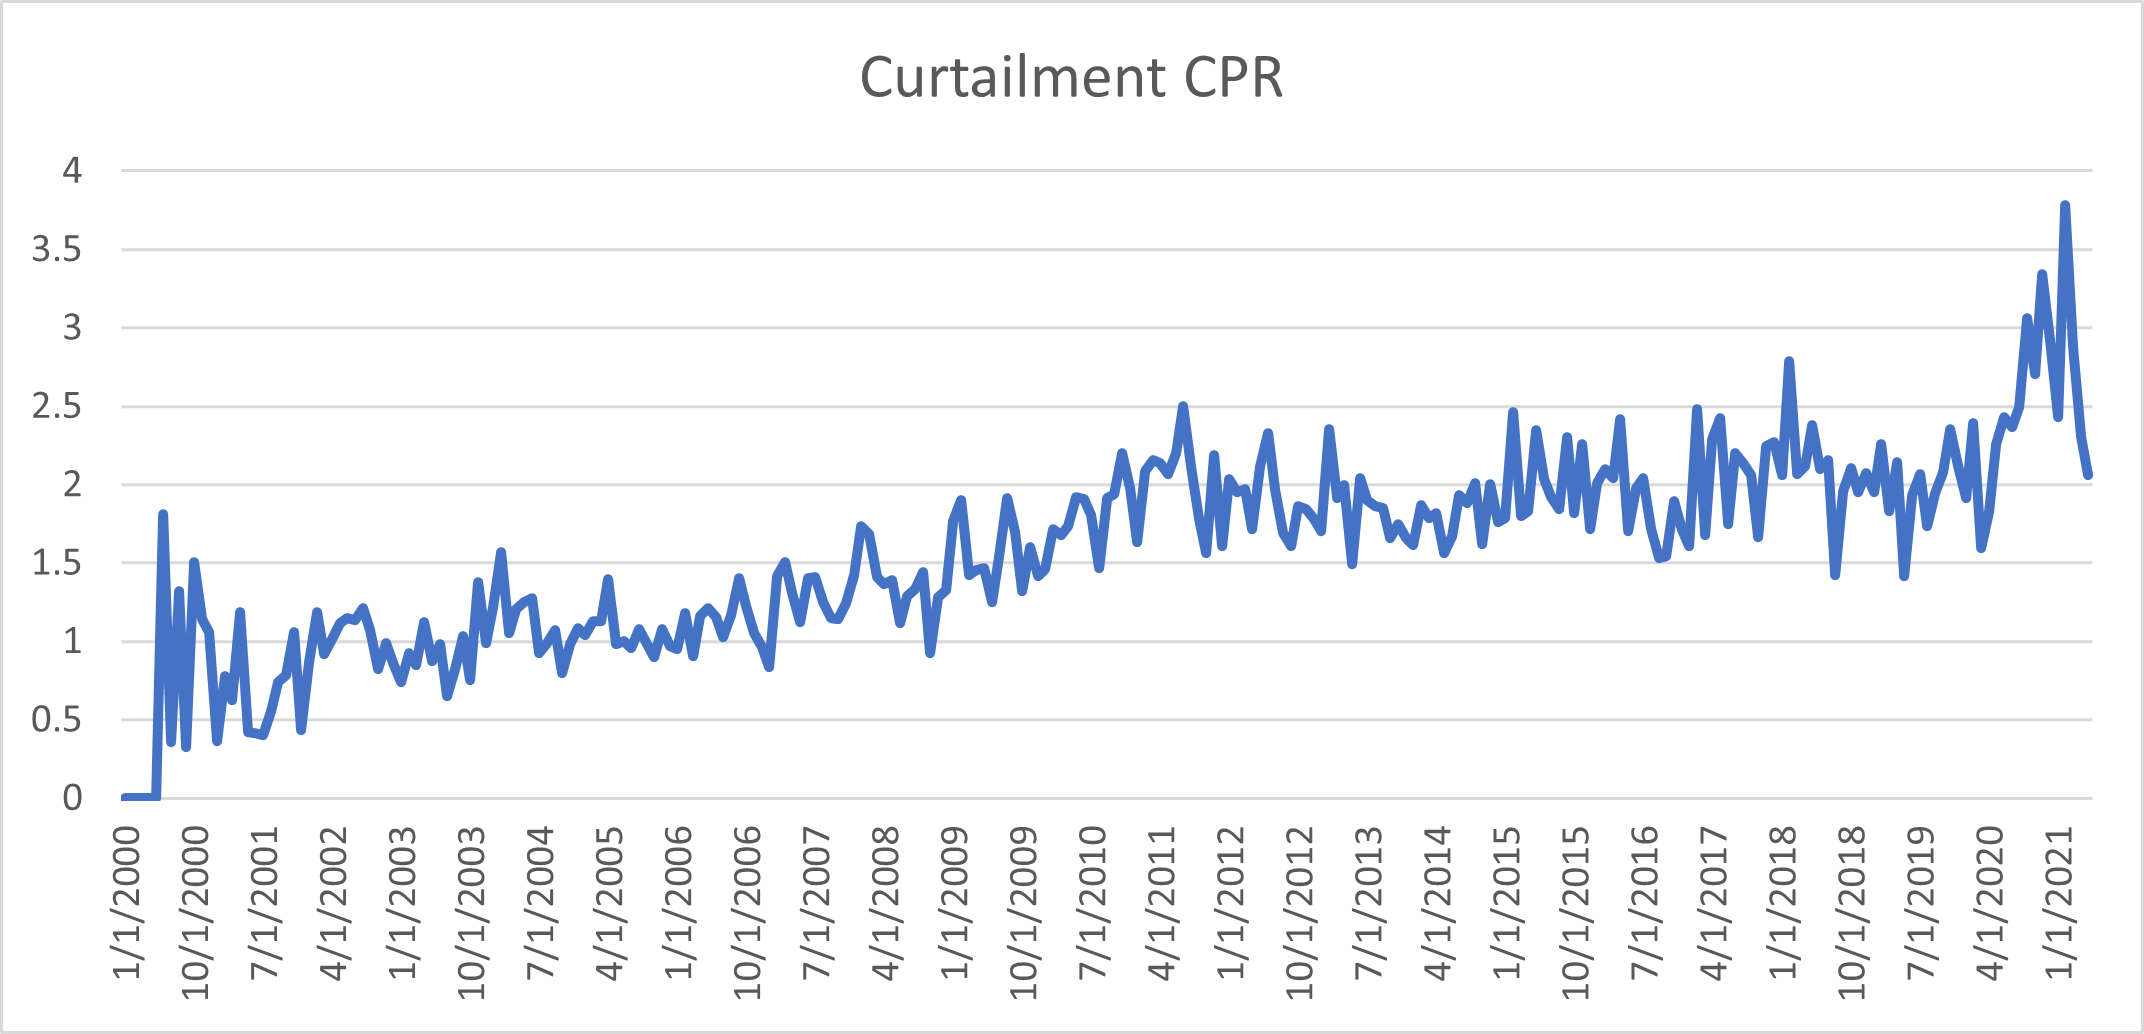 Curtailment CPR